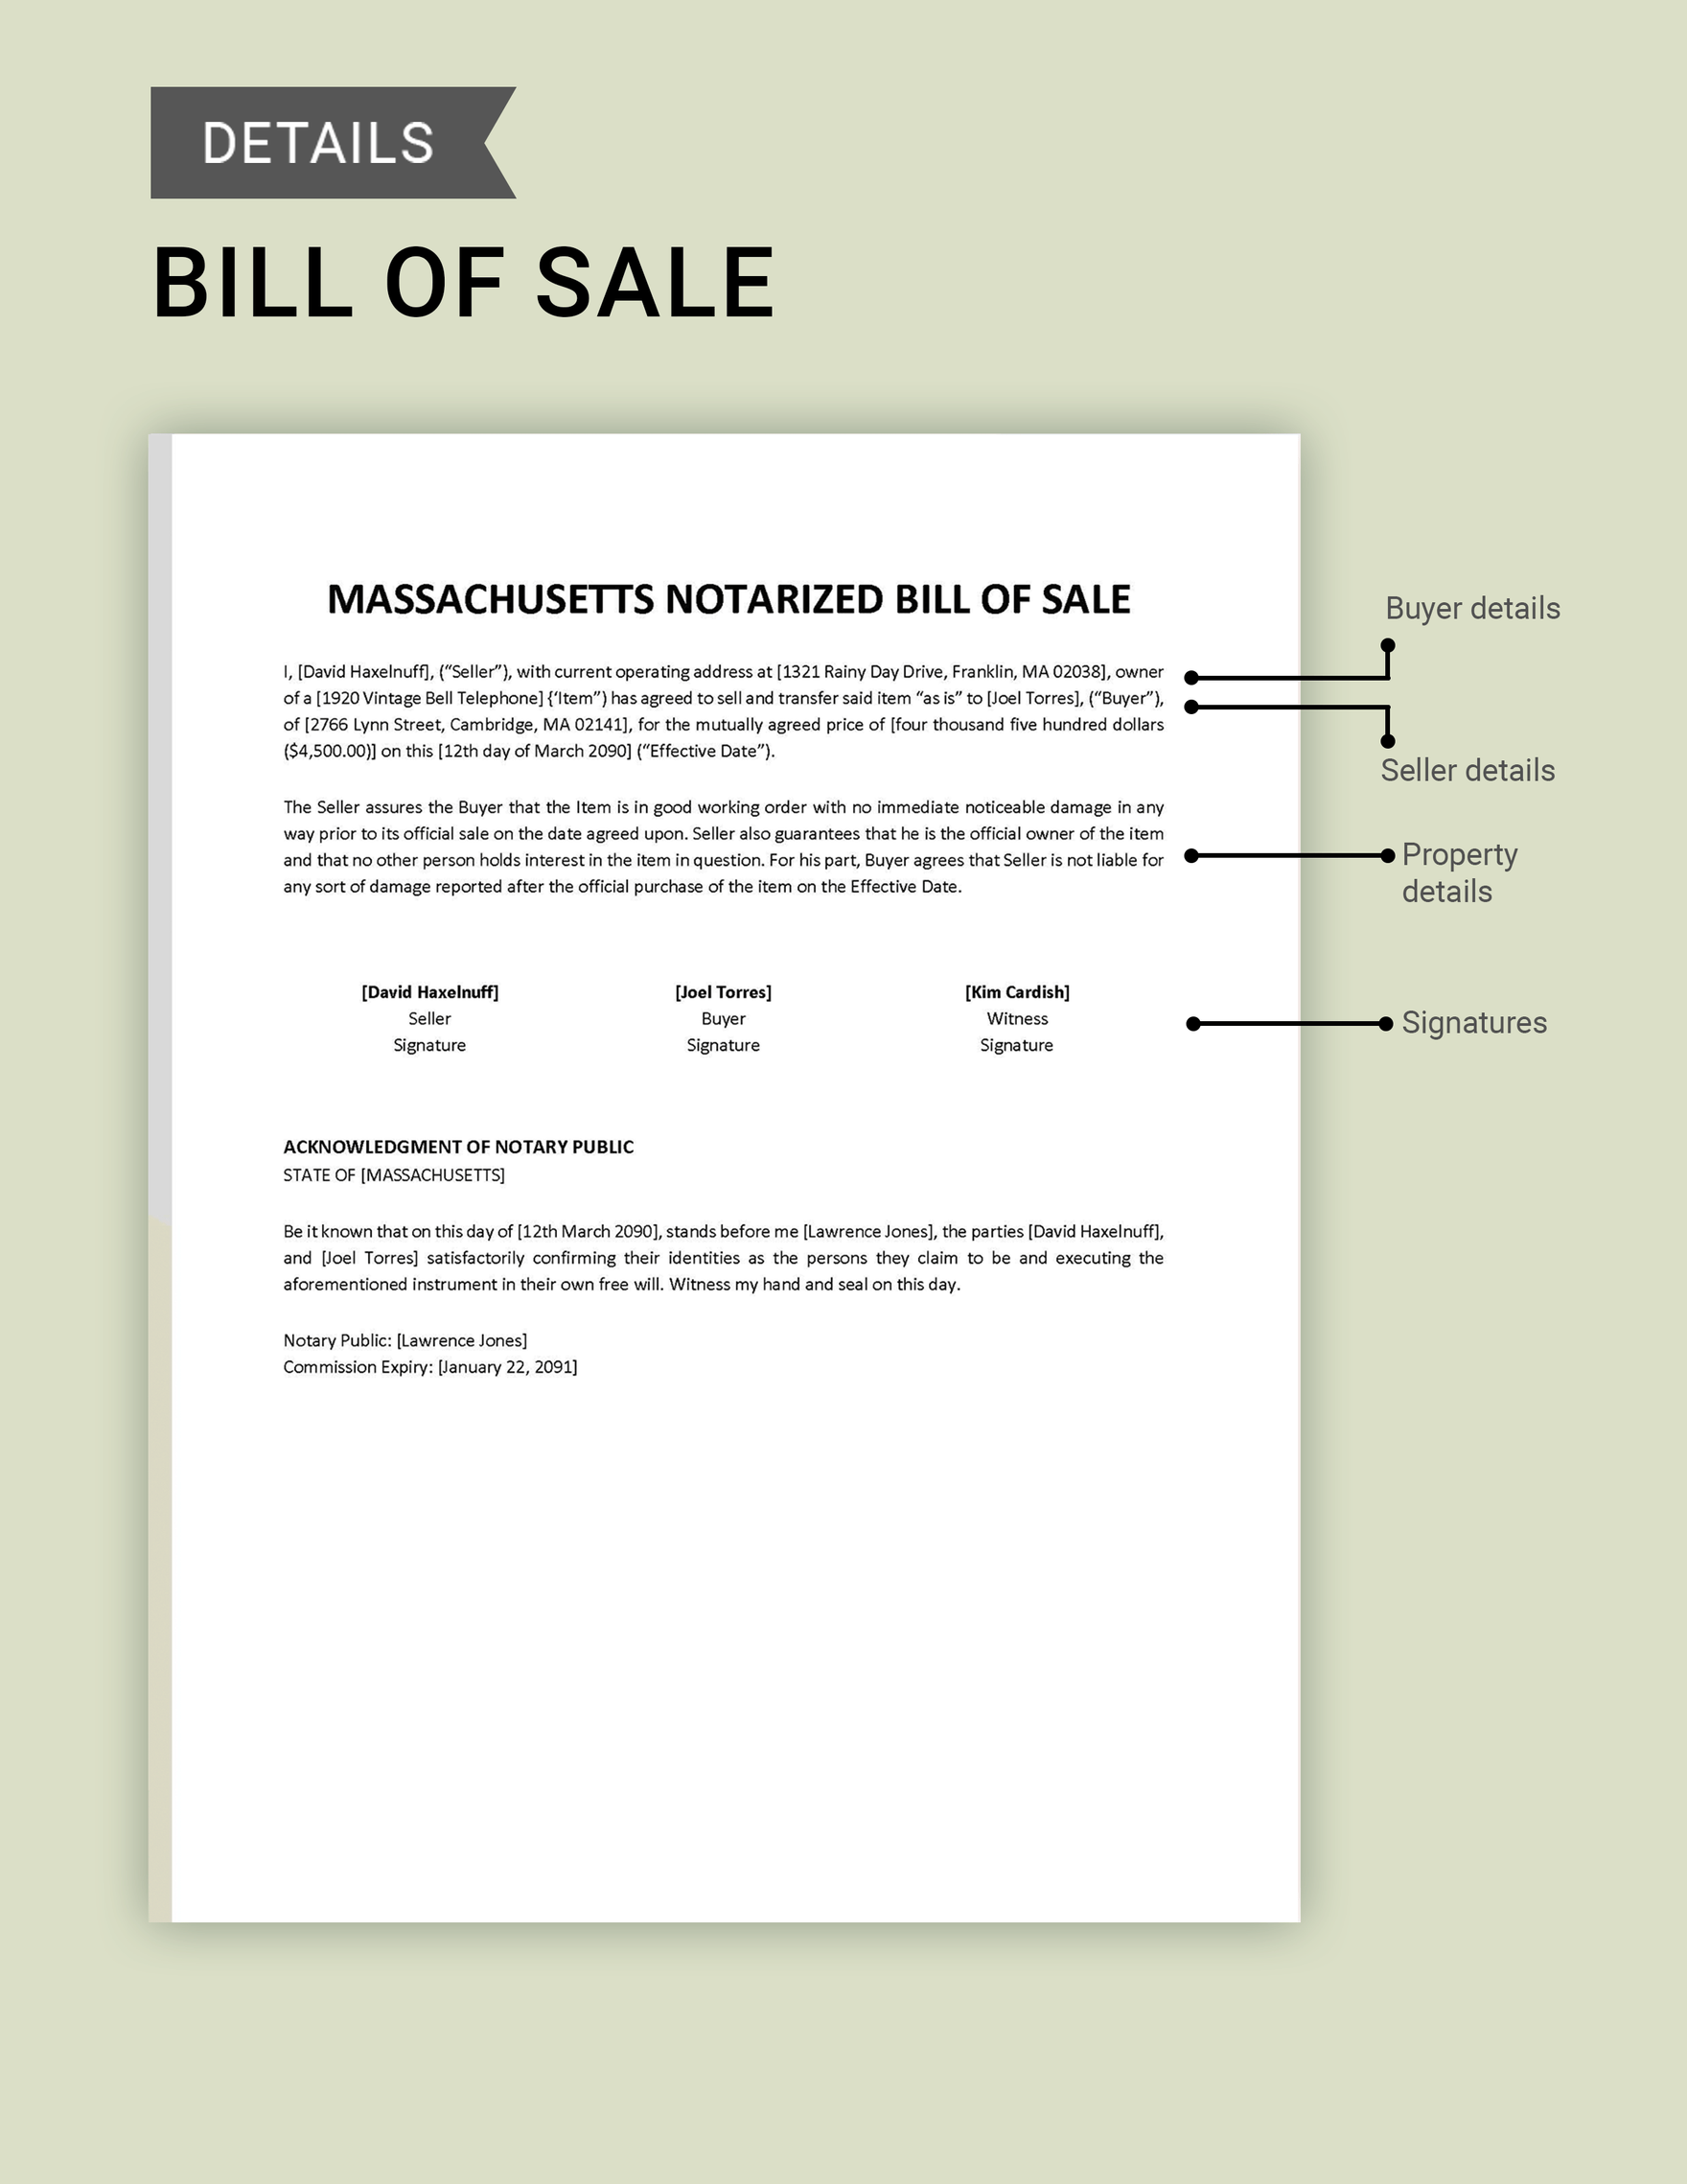 Massachusetts Notarized Bill of Sale Template